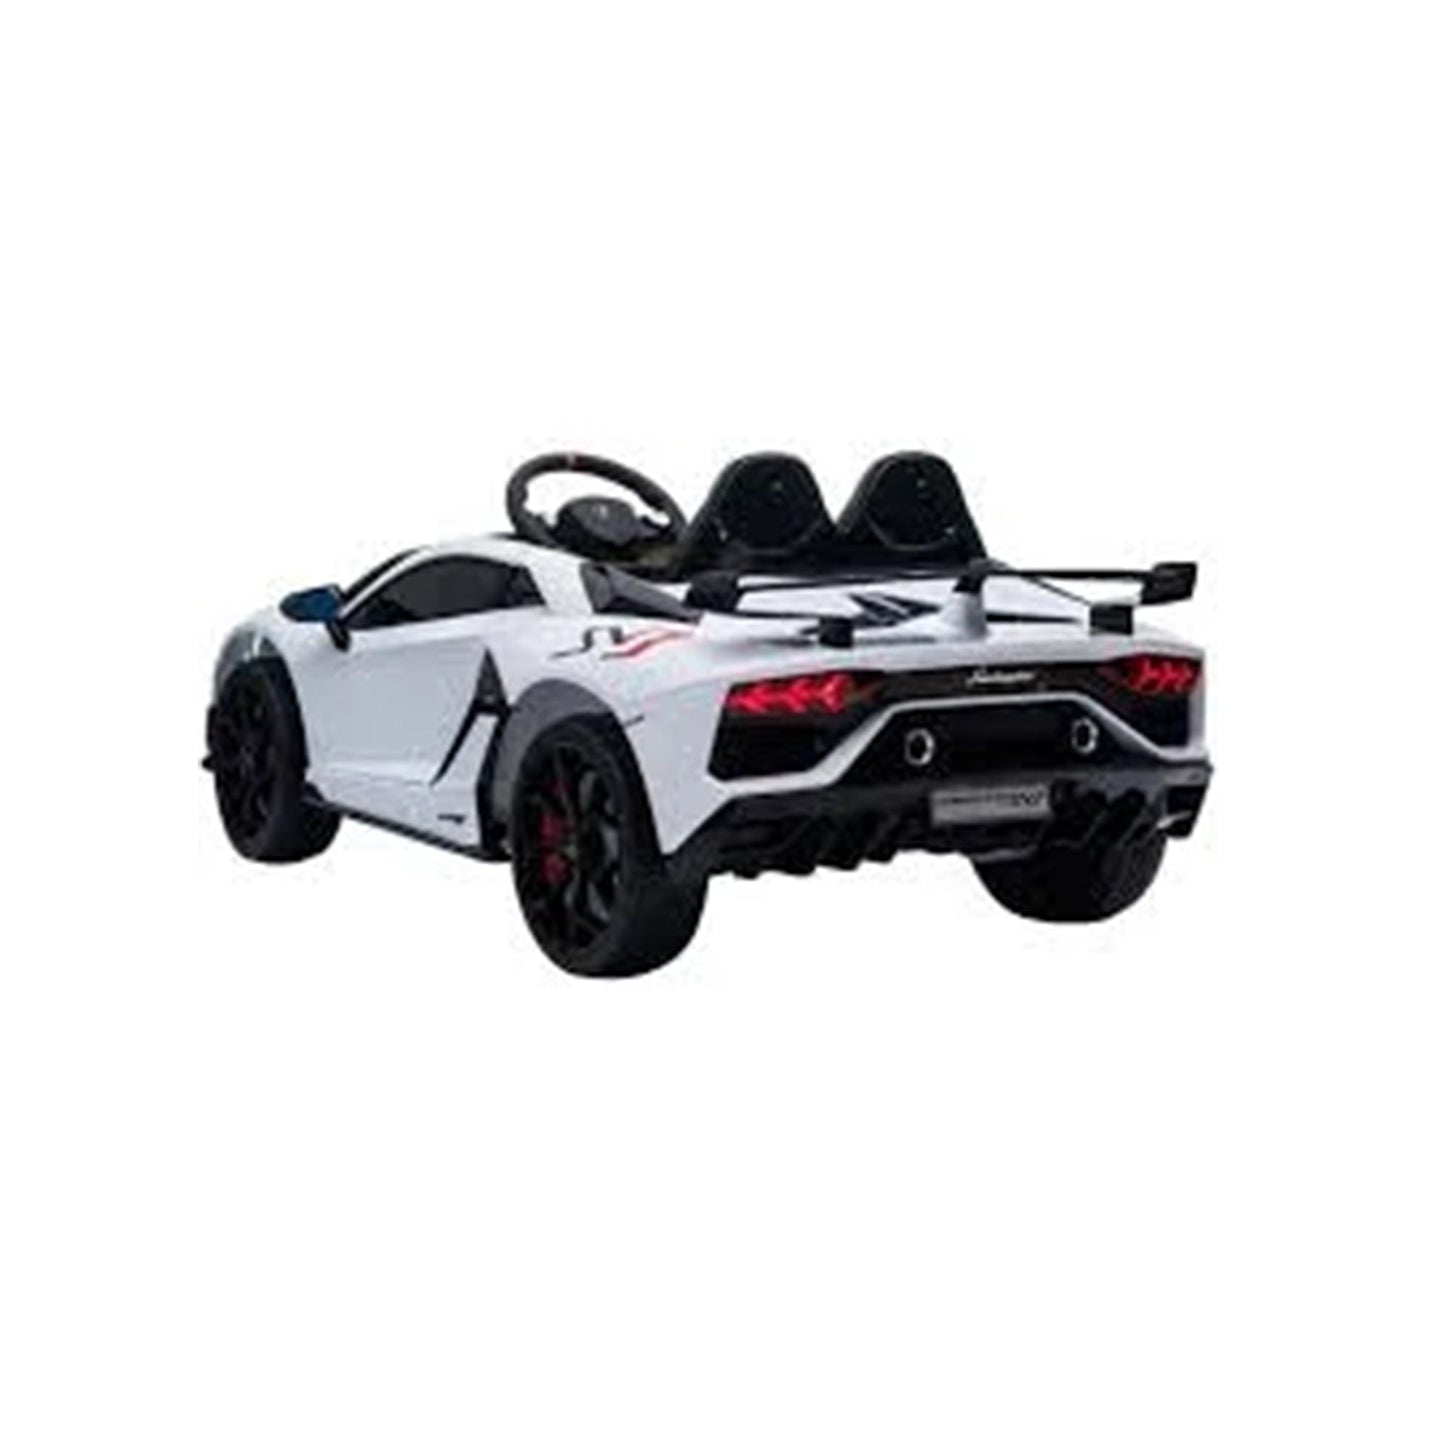 "White Lamborghini SVJ 12 Volt kids electric ride-on with parental remote control at Kids Car Store."